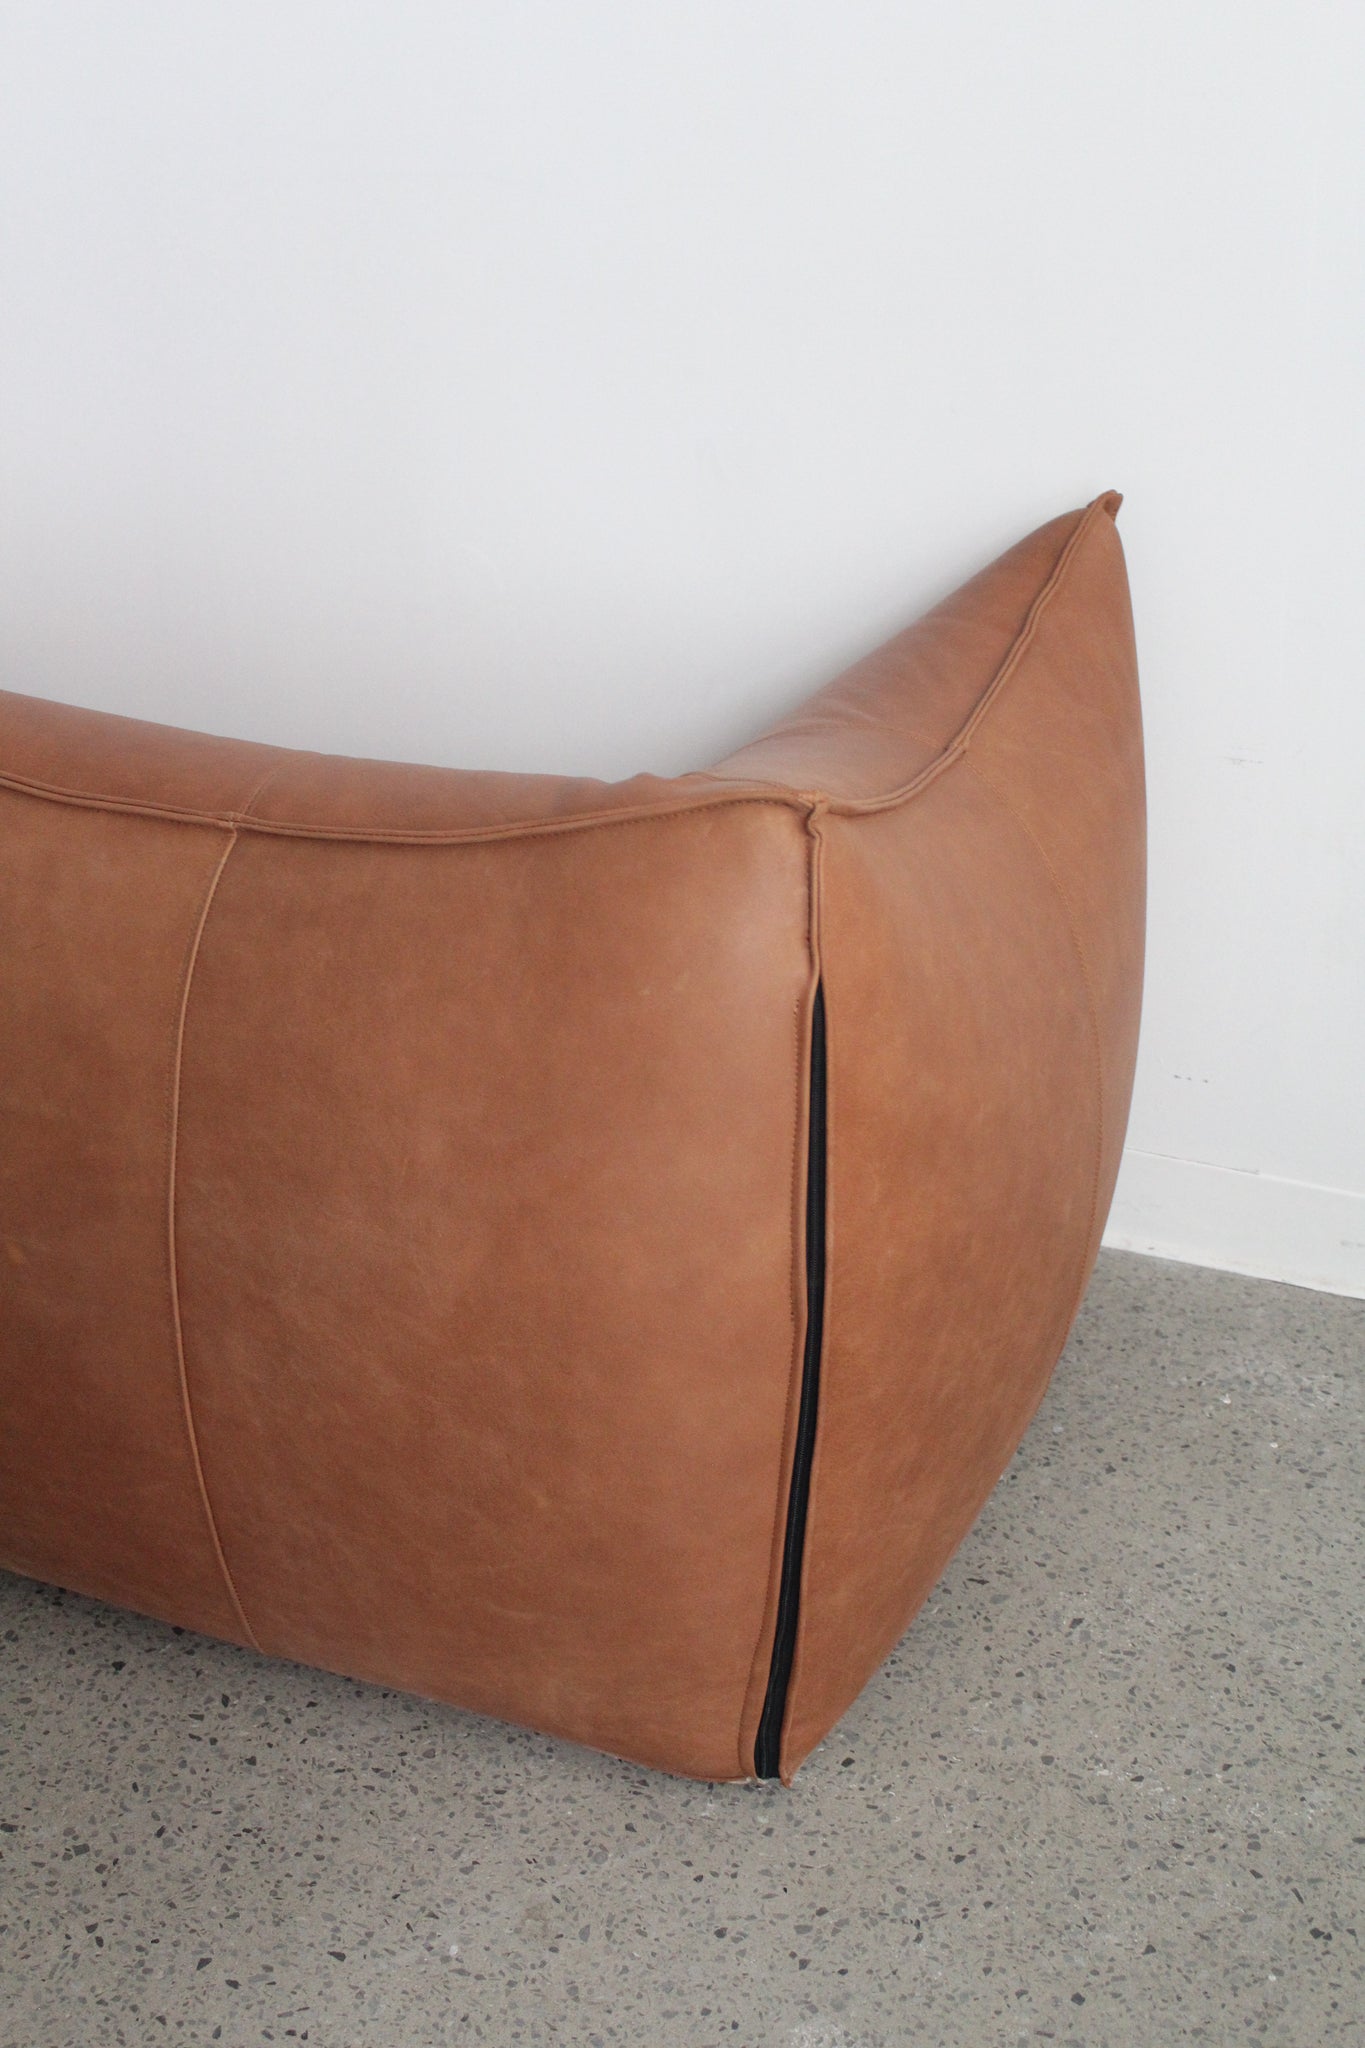 Brown Leather Bambole Sofa by Mario Bellini for B&B Italia